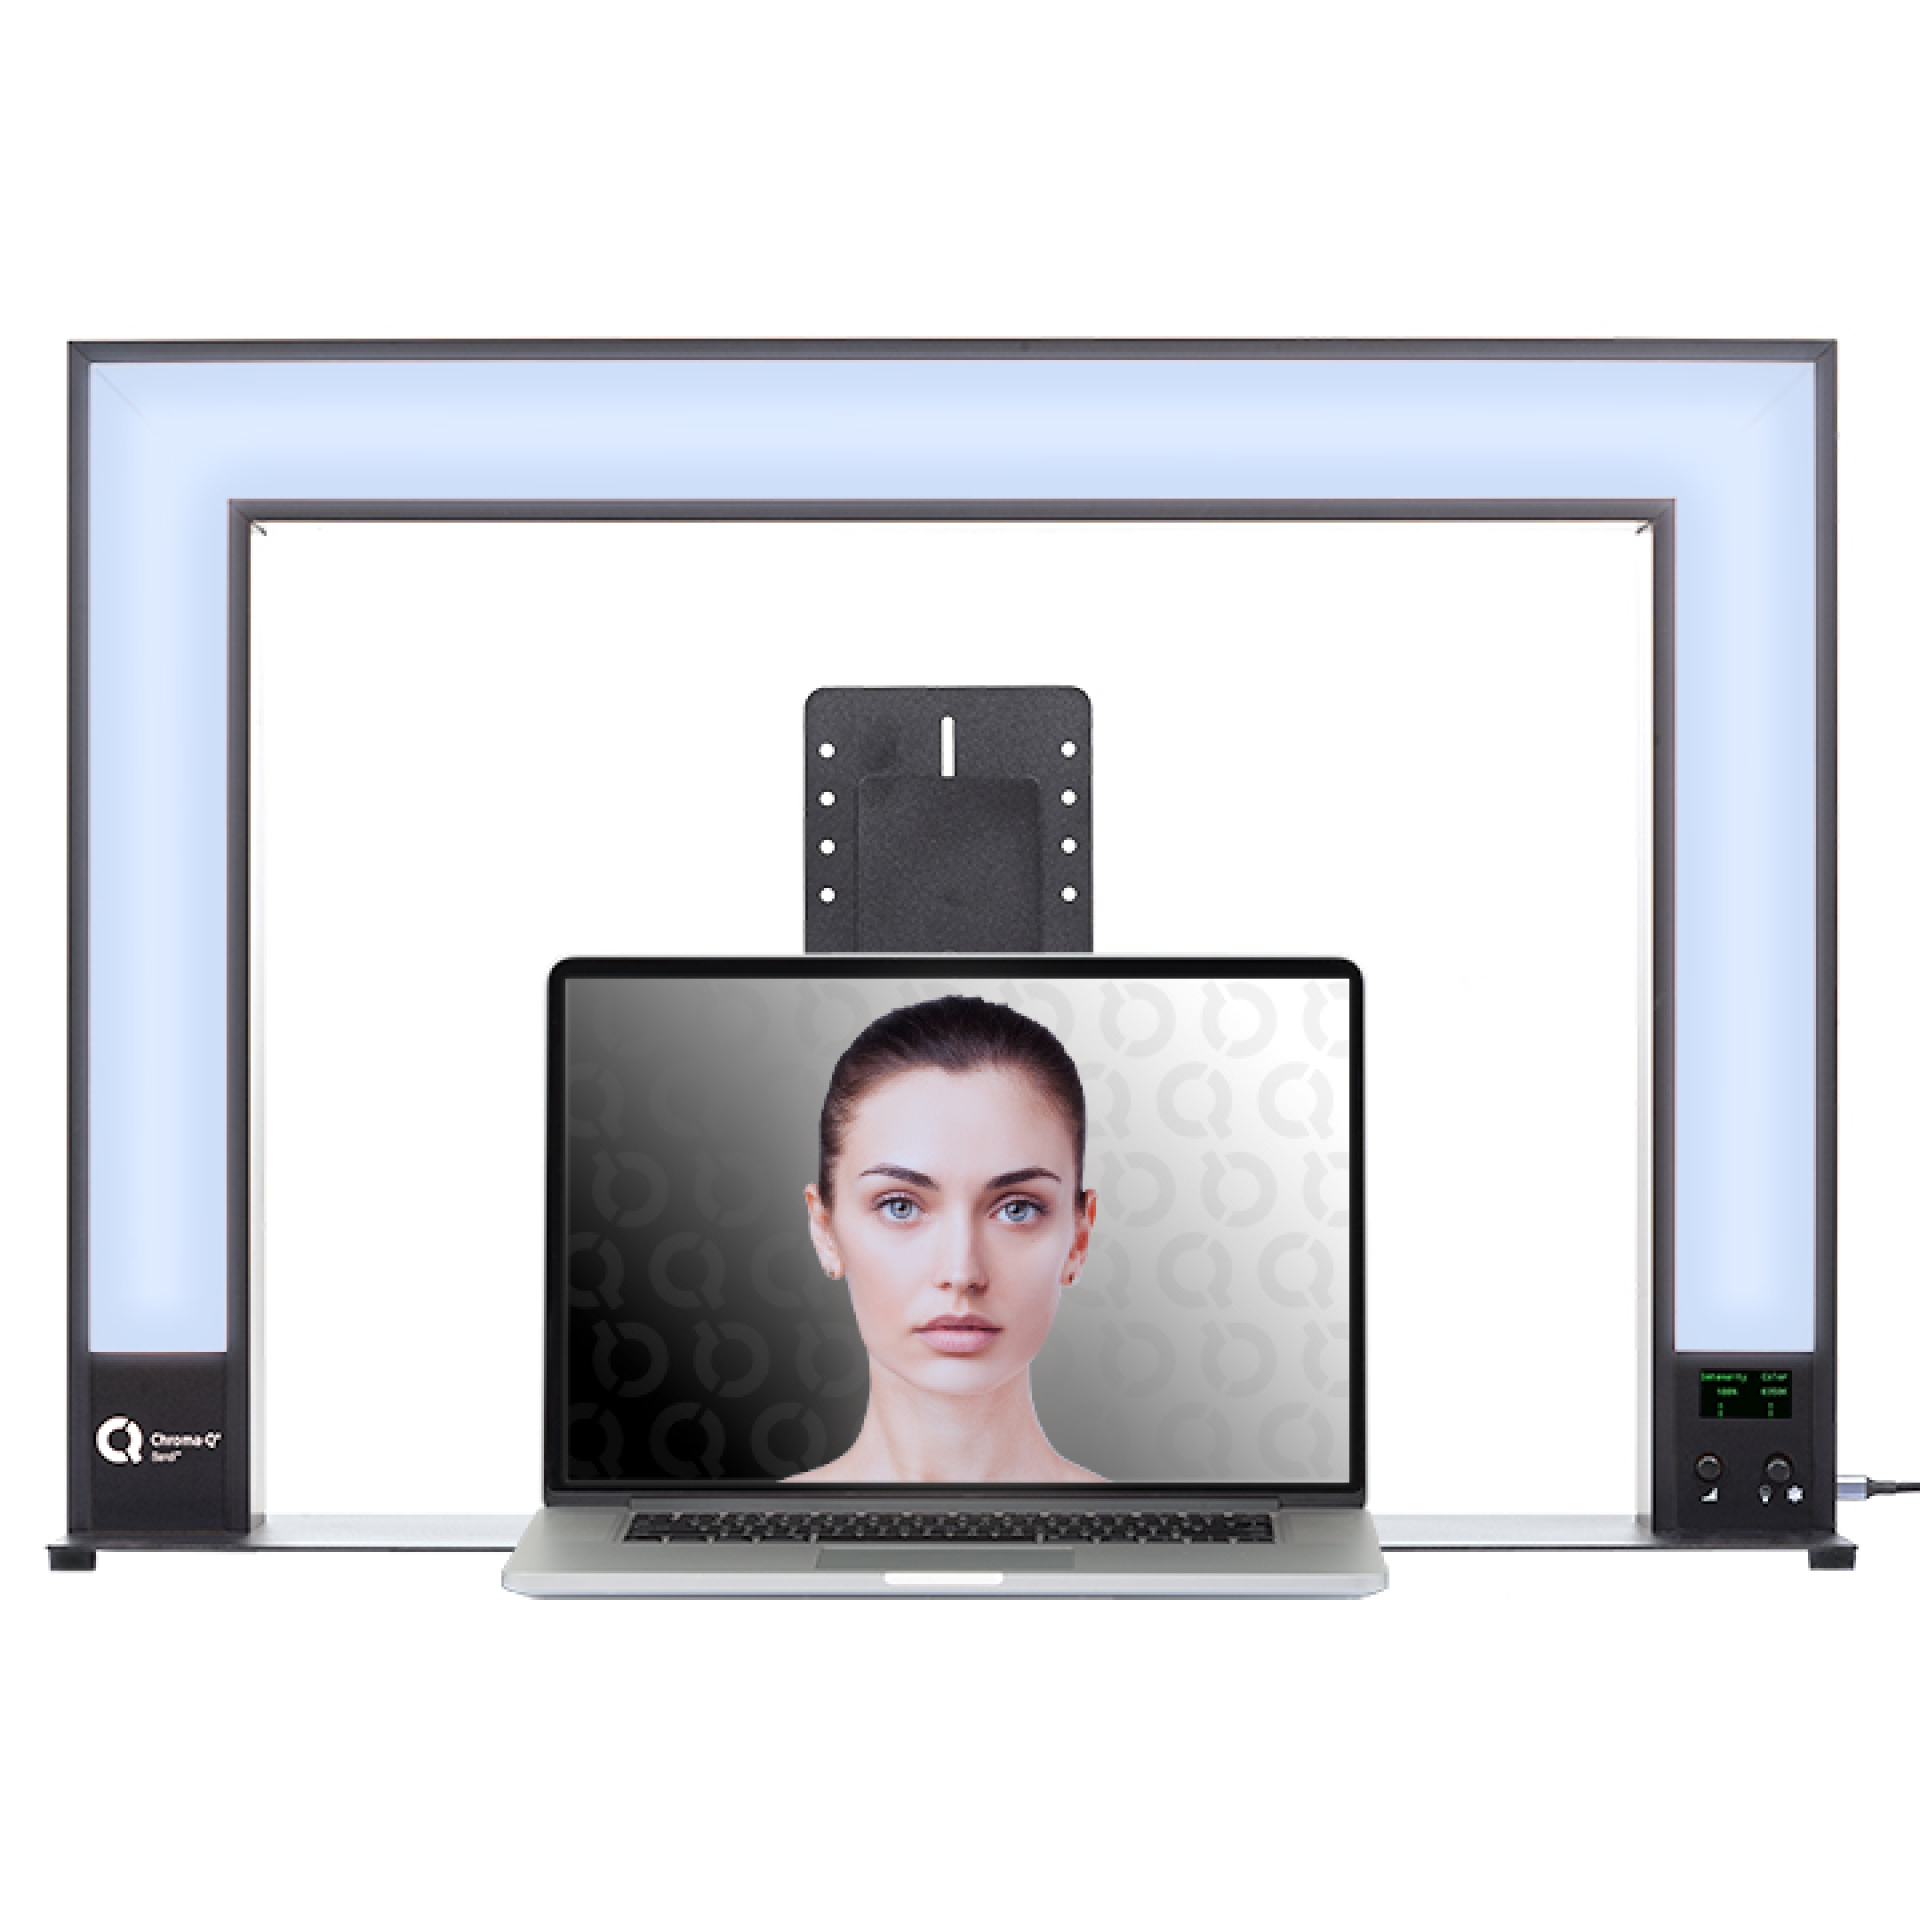 Chroma-Q Sandi - Cold white light with laptop